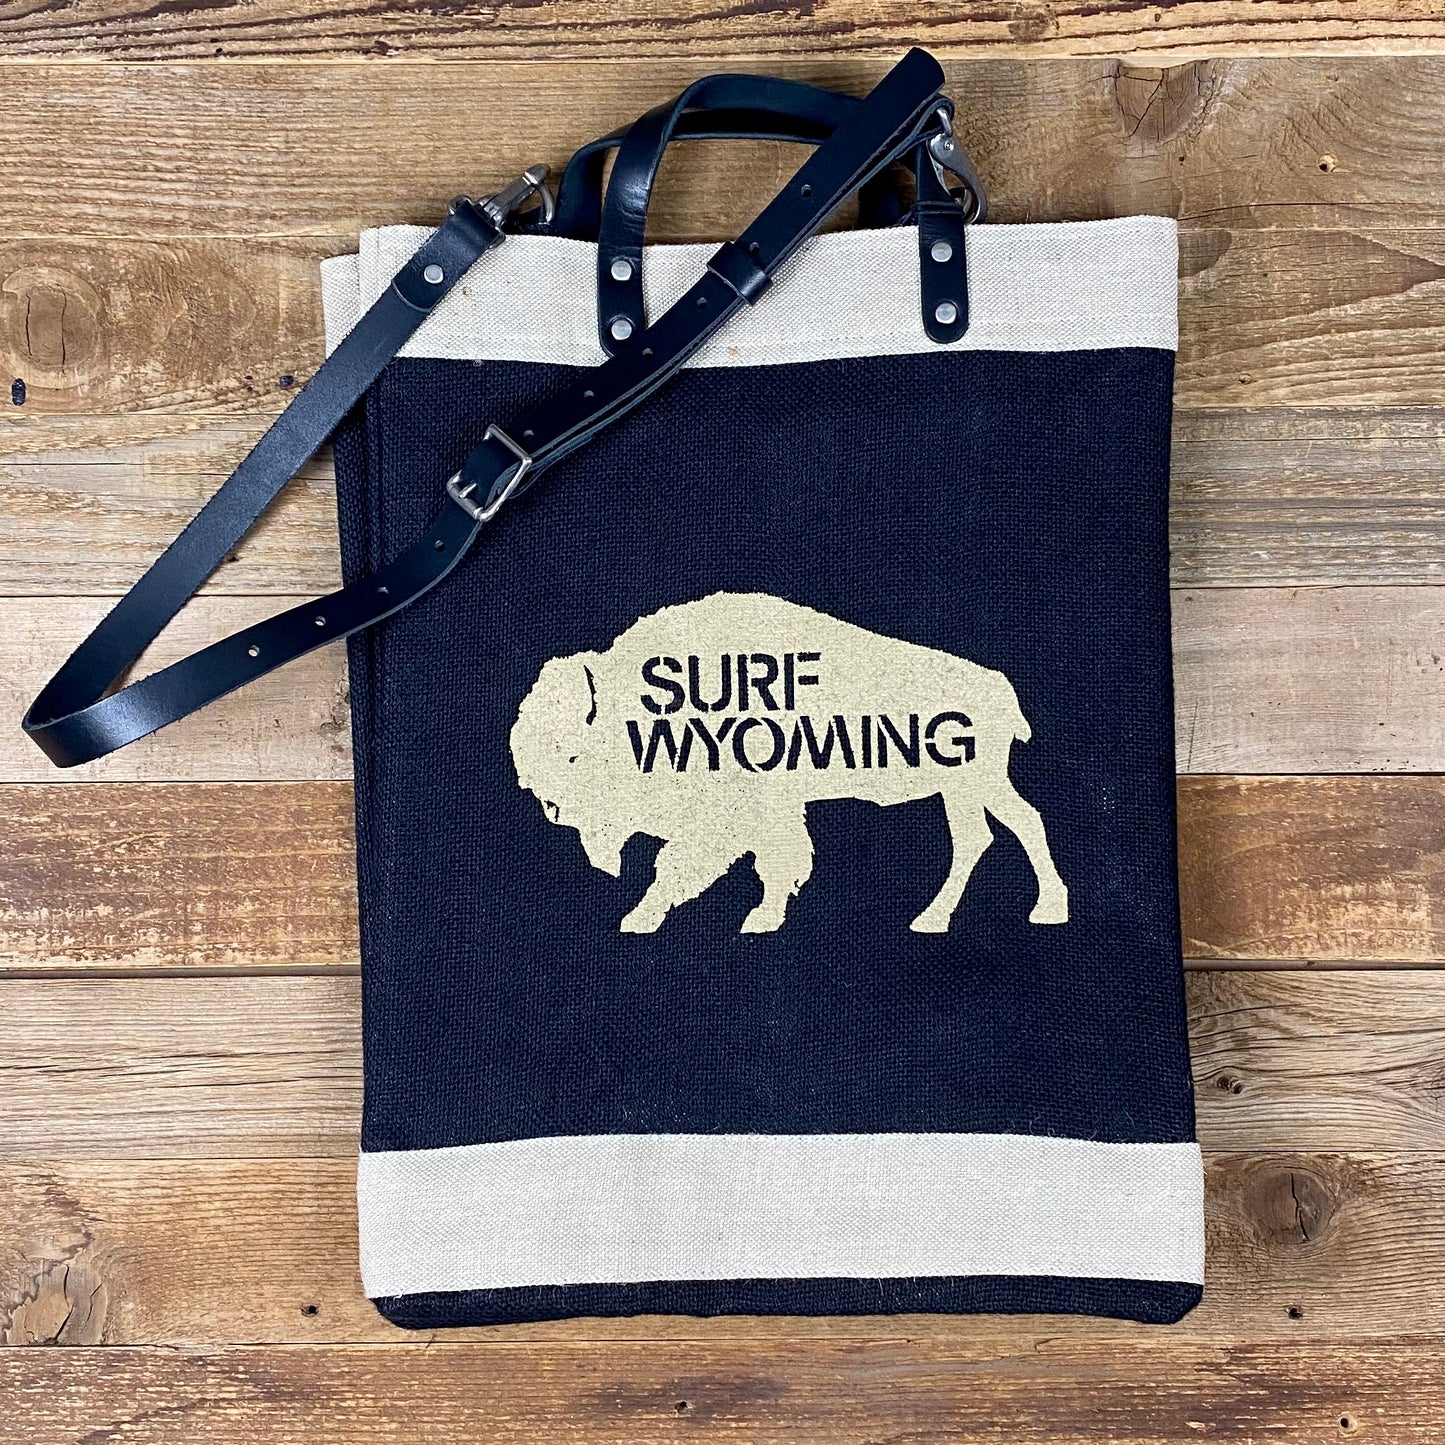 Surf Wyoming® x Apolis Leather Handle Market Bag - Black